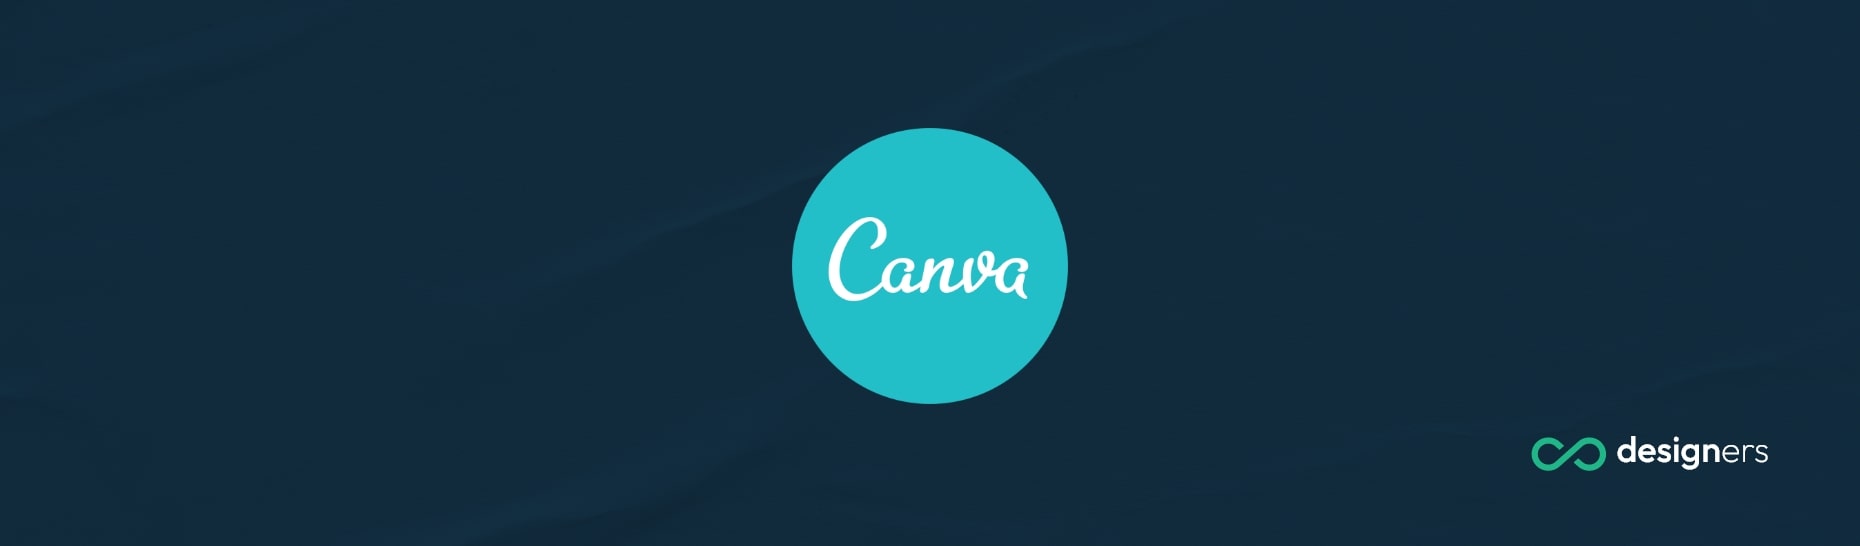 How Do I Create a Canva Account? 